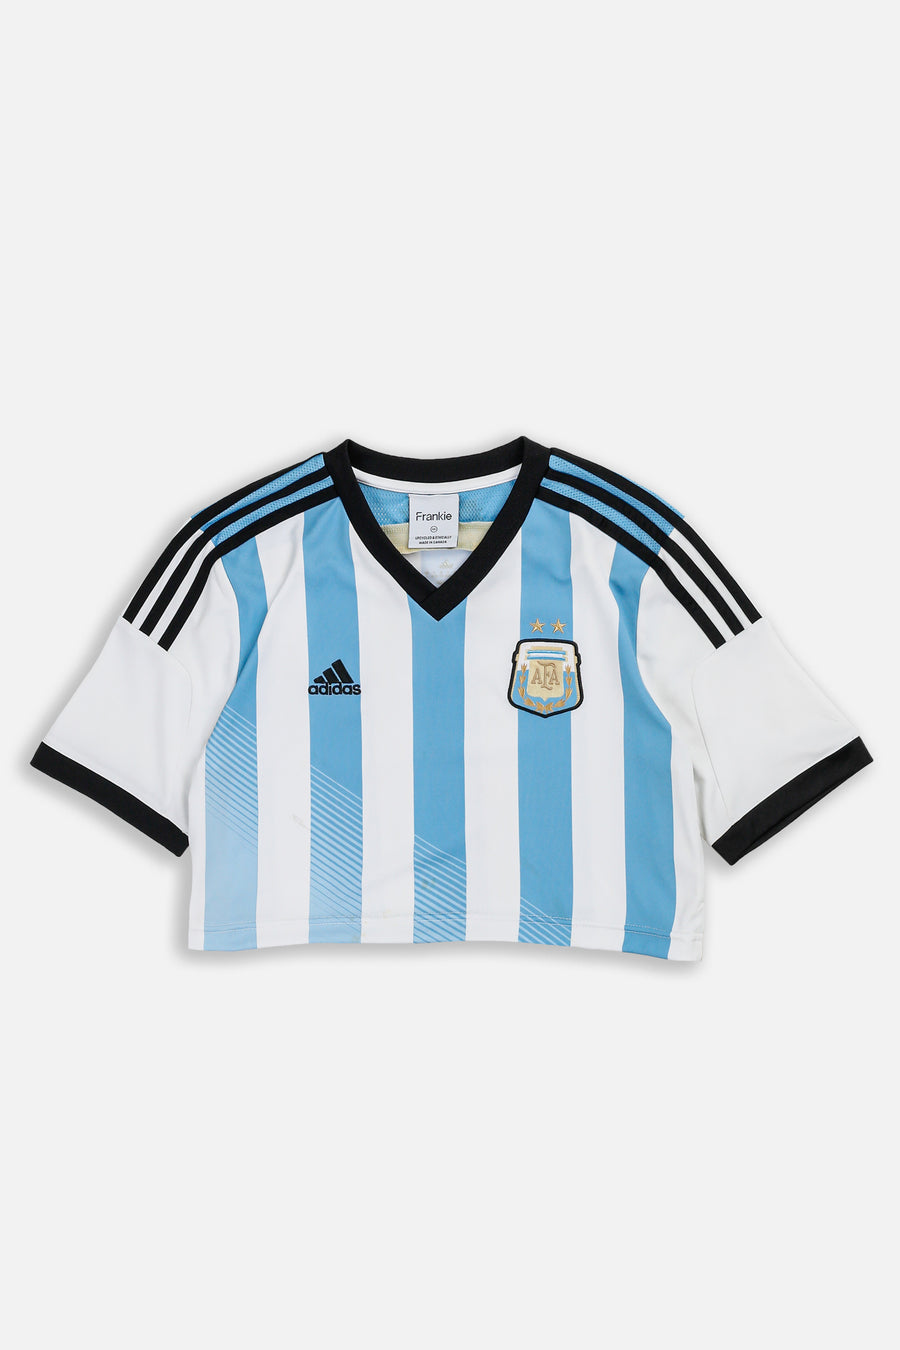 Rework Crop Argentina Soccer Jersey - XS